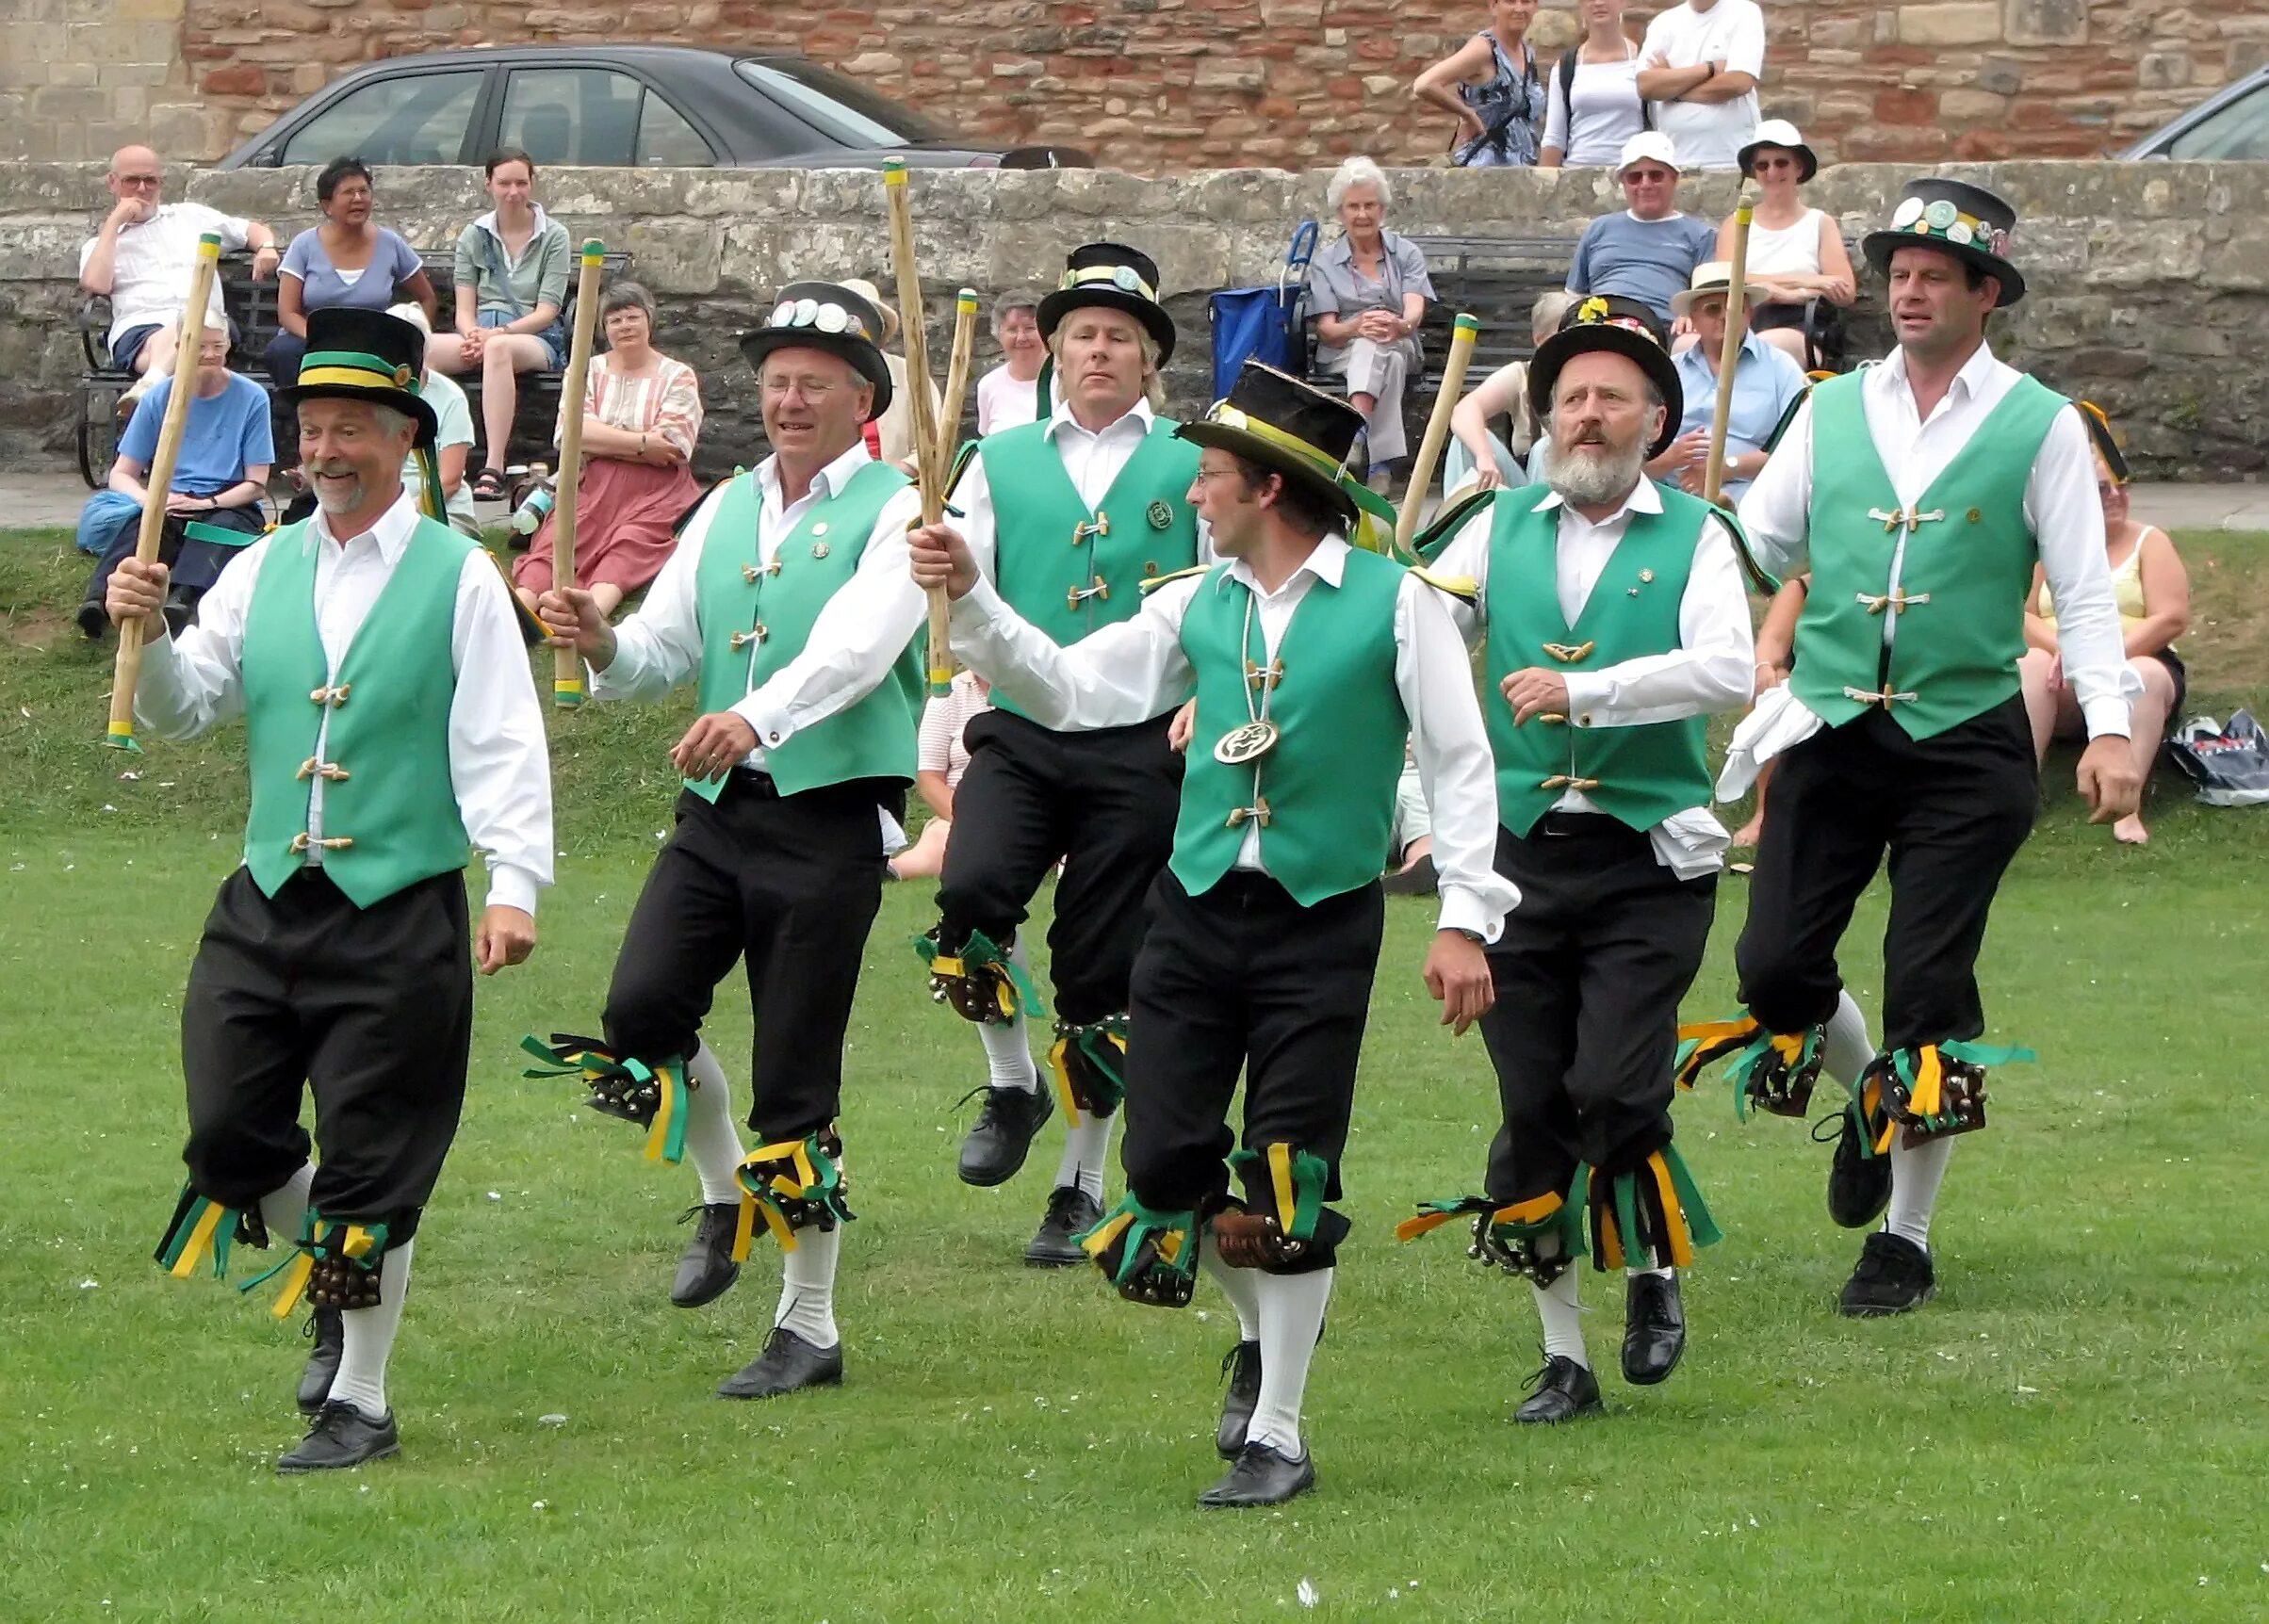 What old irish traditions. Моррис дансинг Великобритания. Танец англичан Моррис. Моррис танцы в Британии. Morris Dancers в Великобритании.